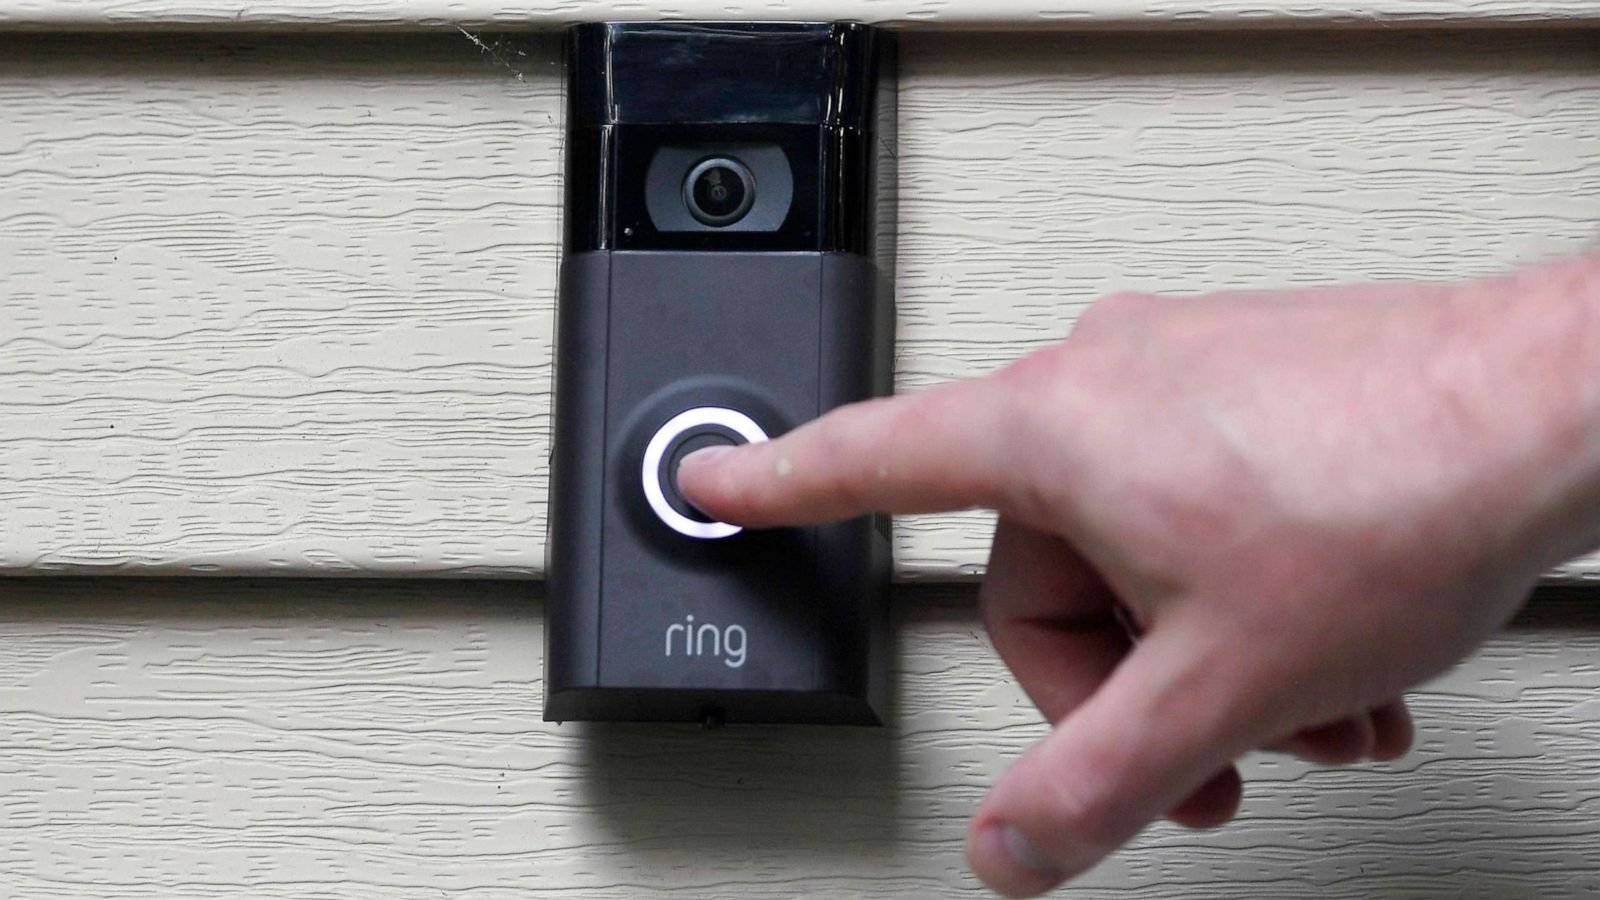 install ring doorbell at apartment